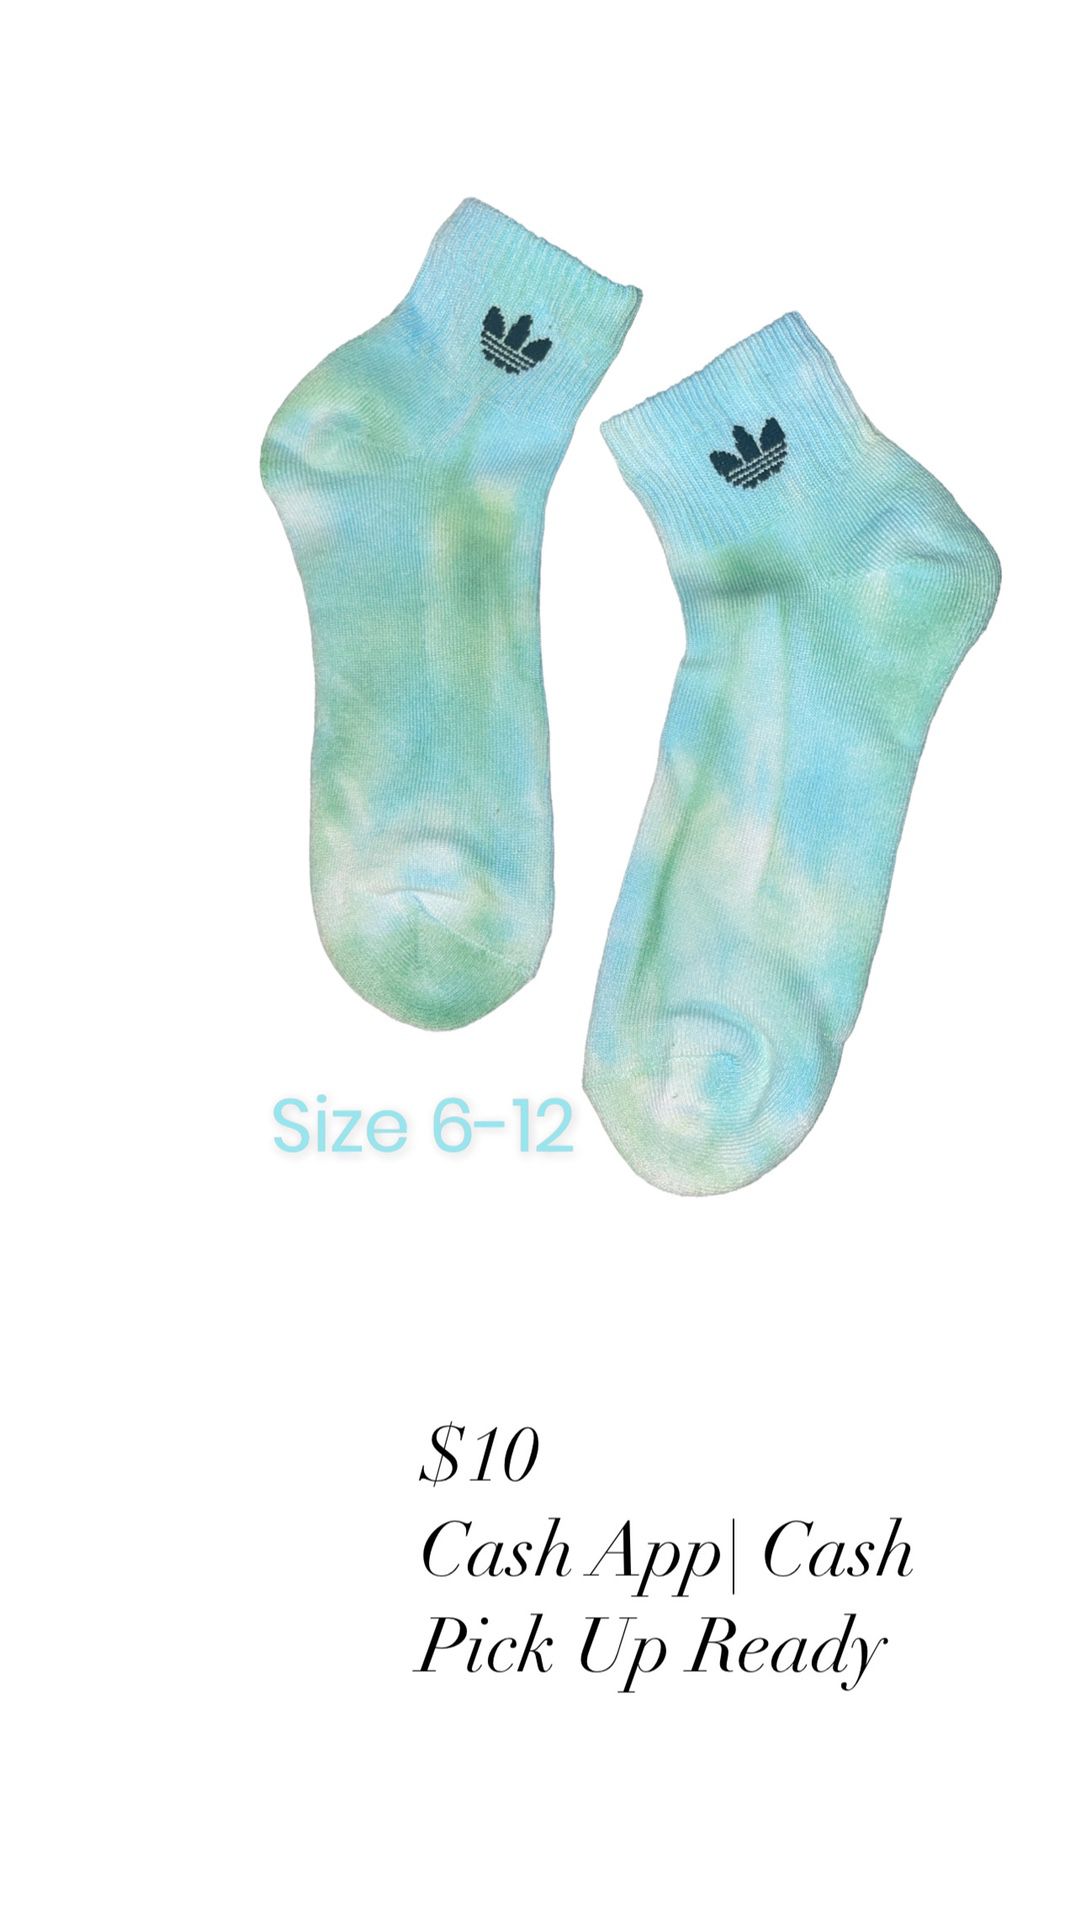 Adidas Tye Dye Socks $10 